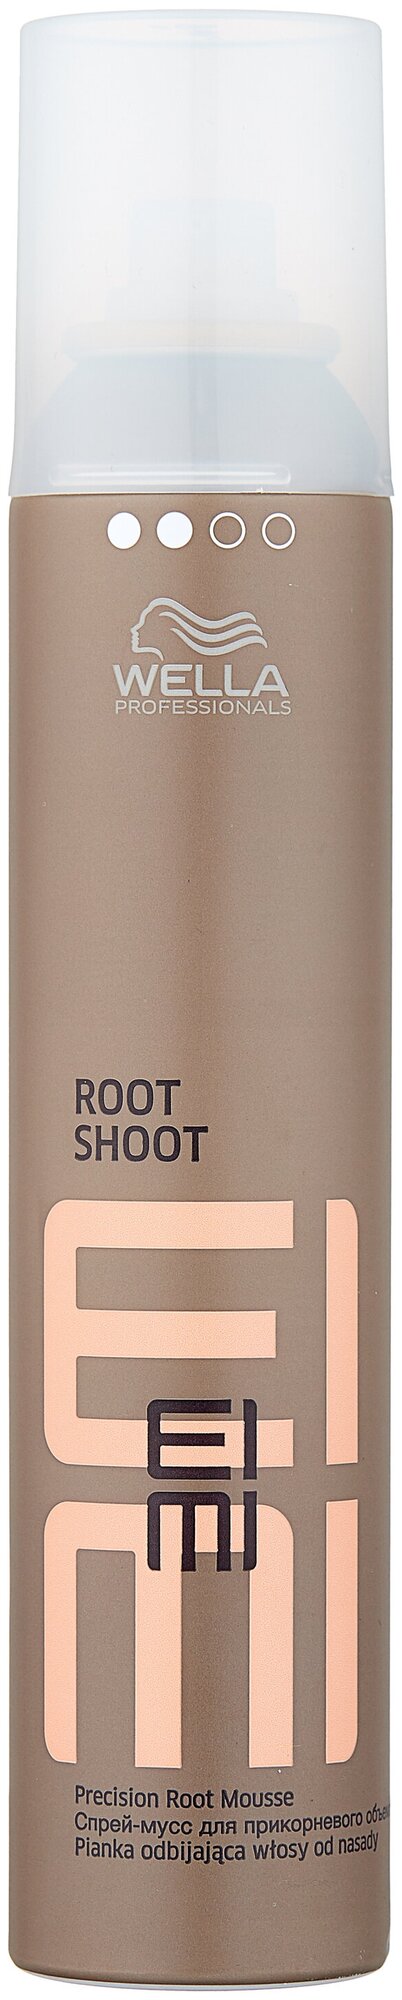 Wella Professionals Eimi Root Shoot -   , 200 